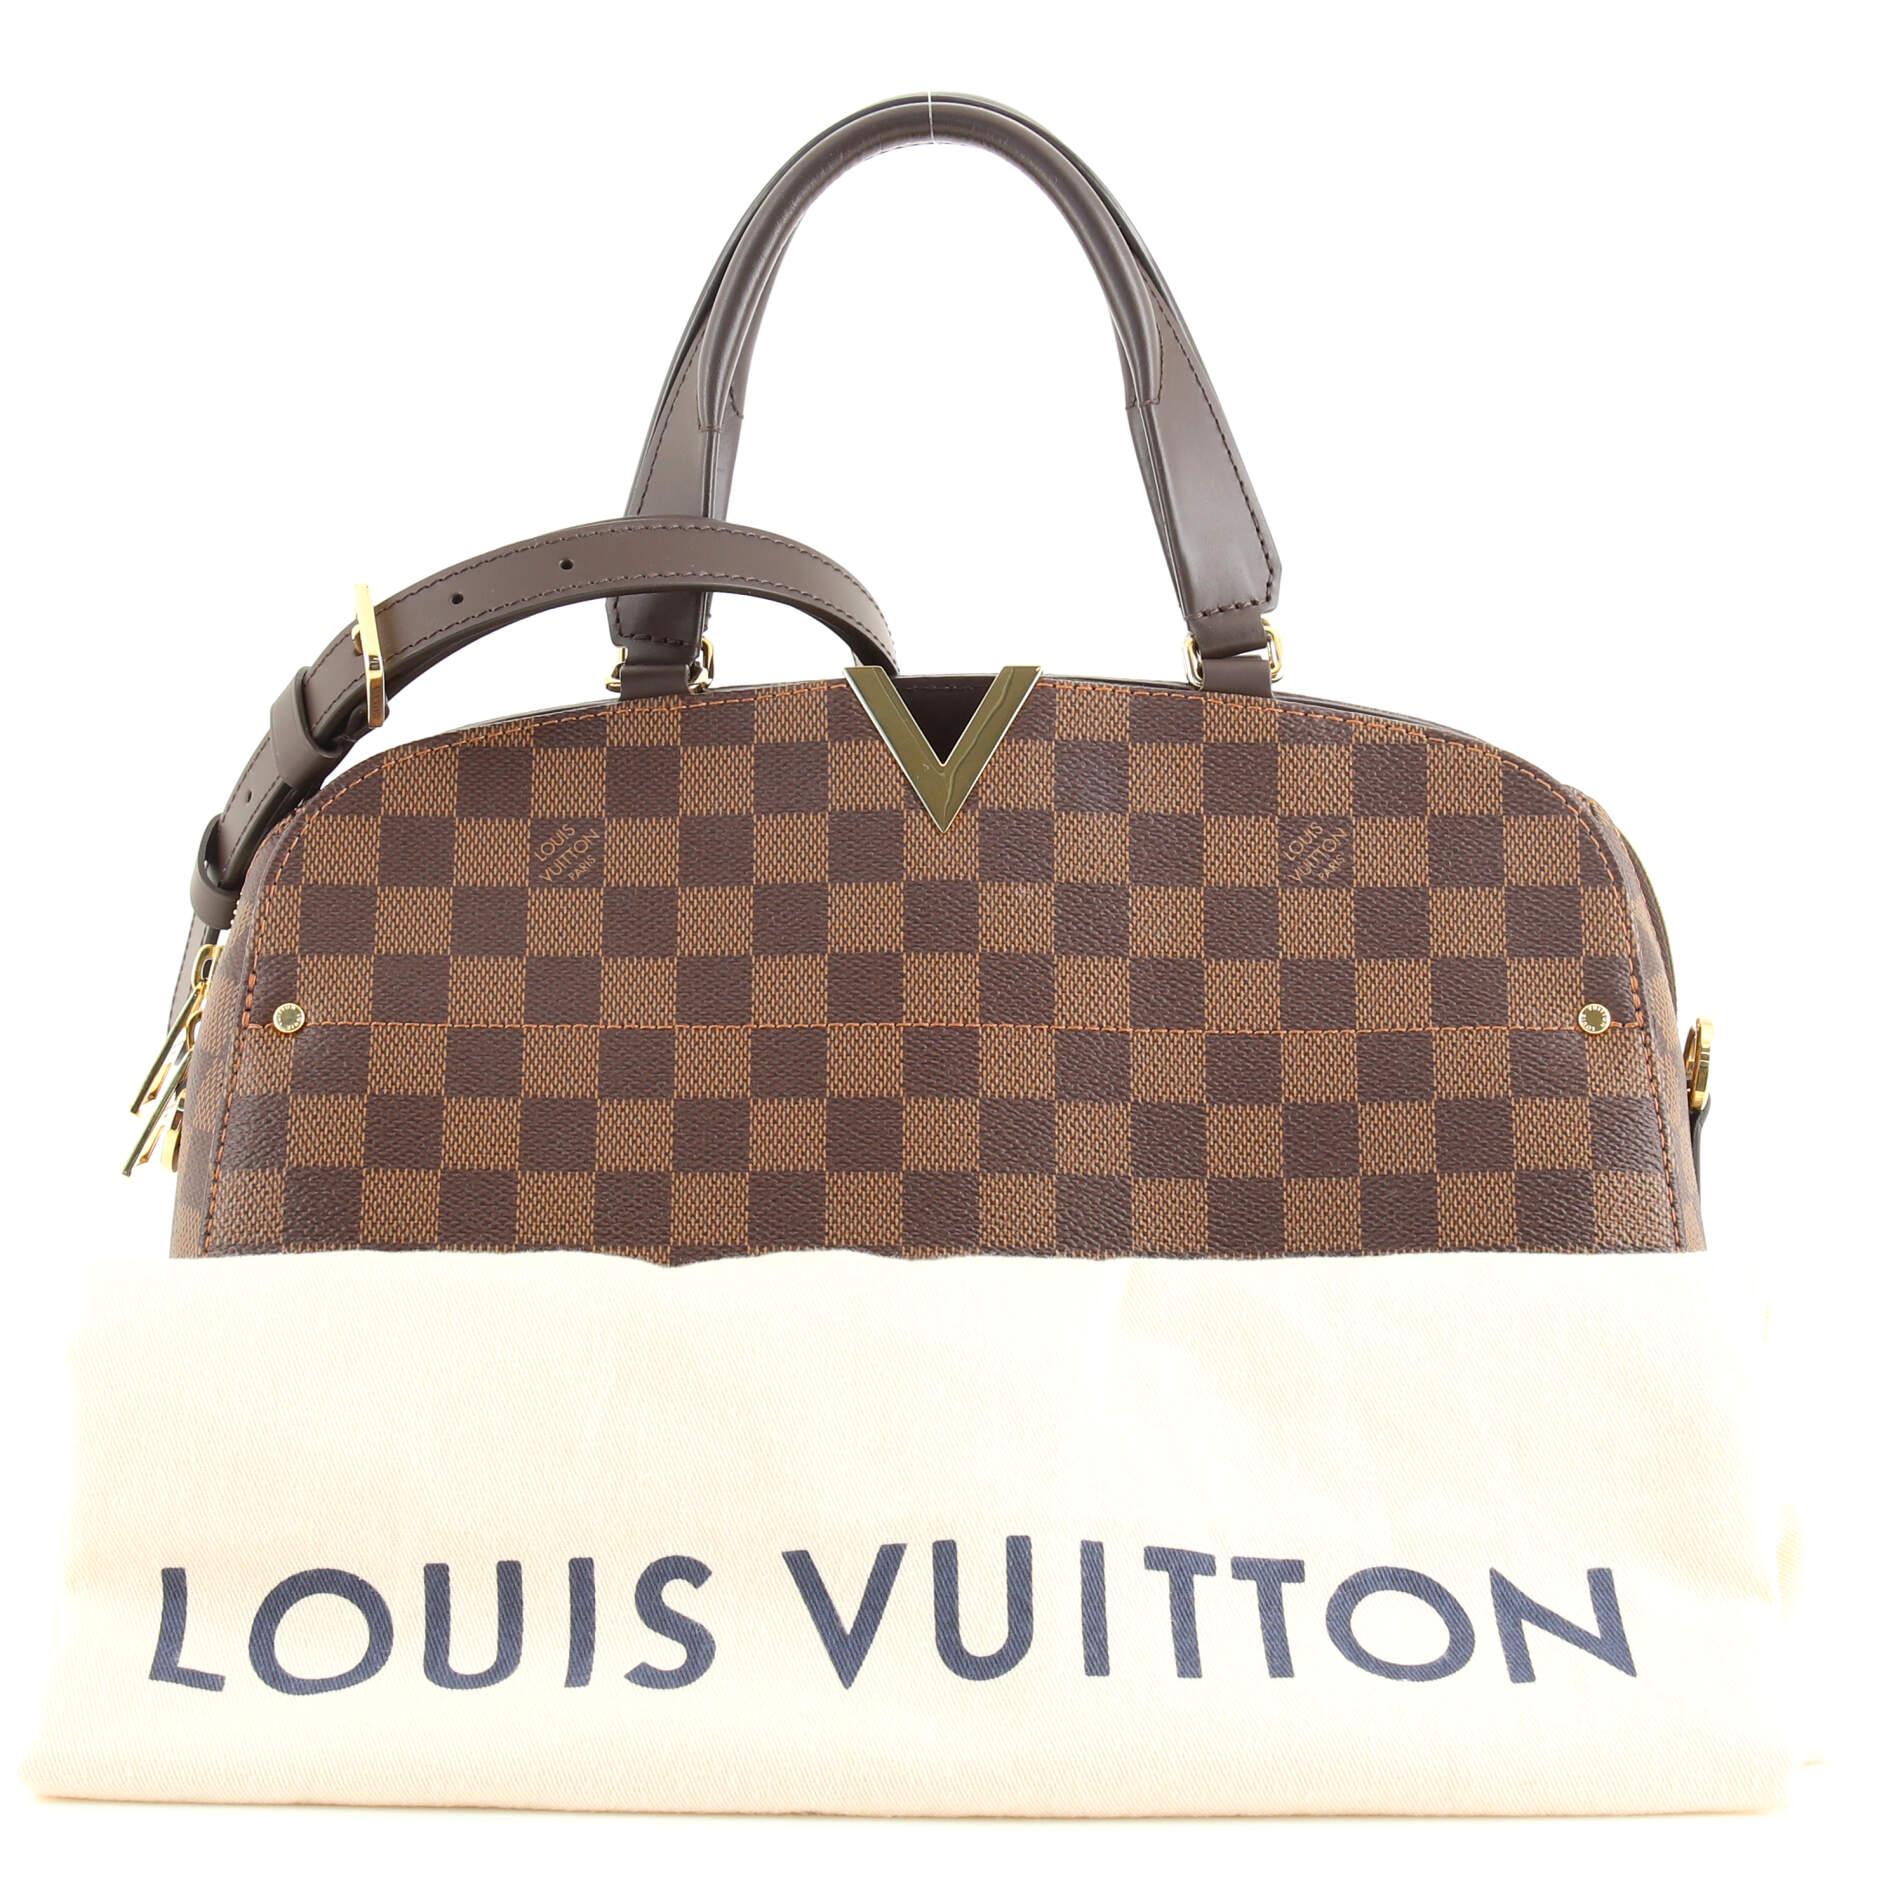 Louis Vuitton Kensington bowling bag